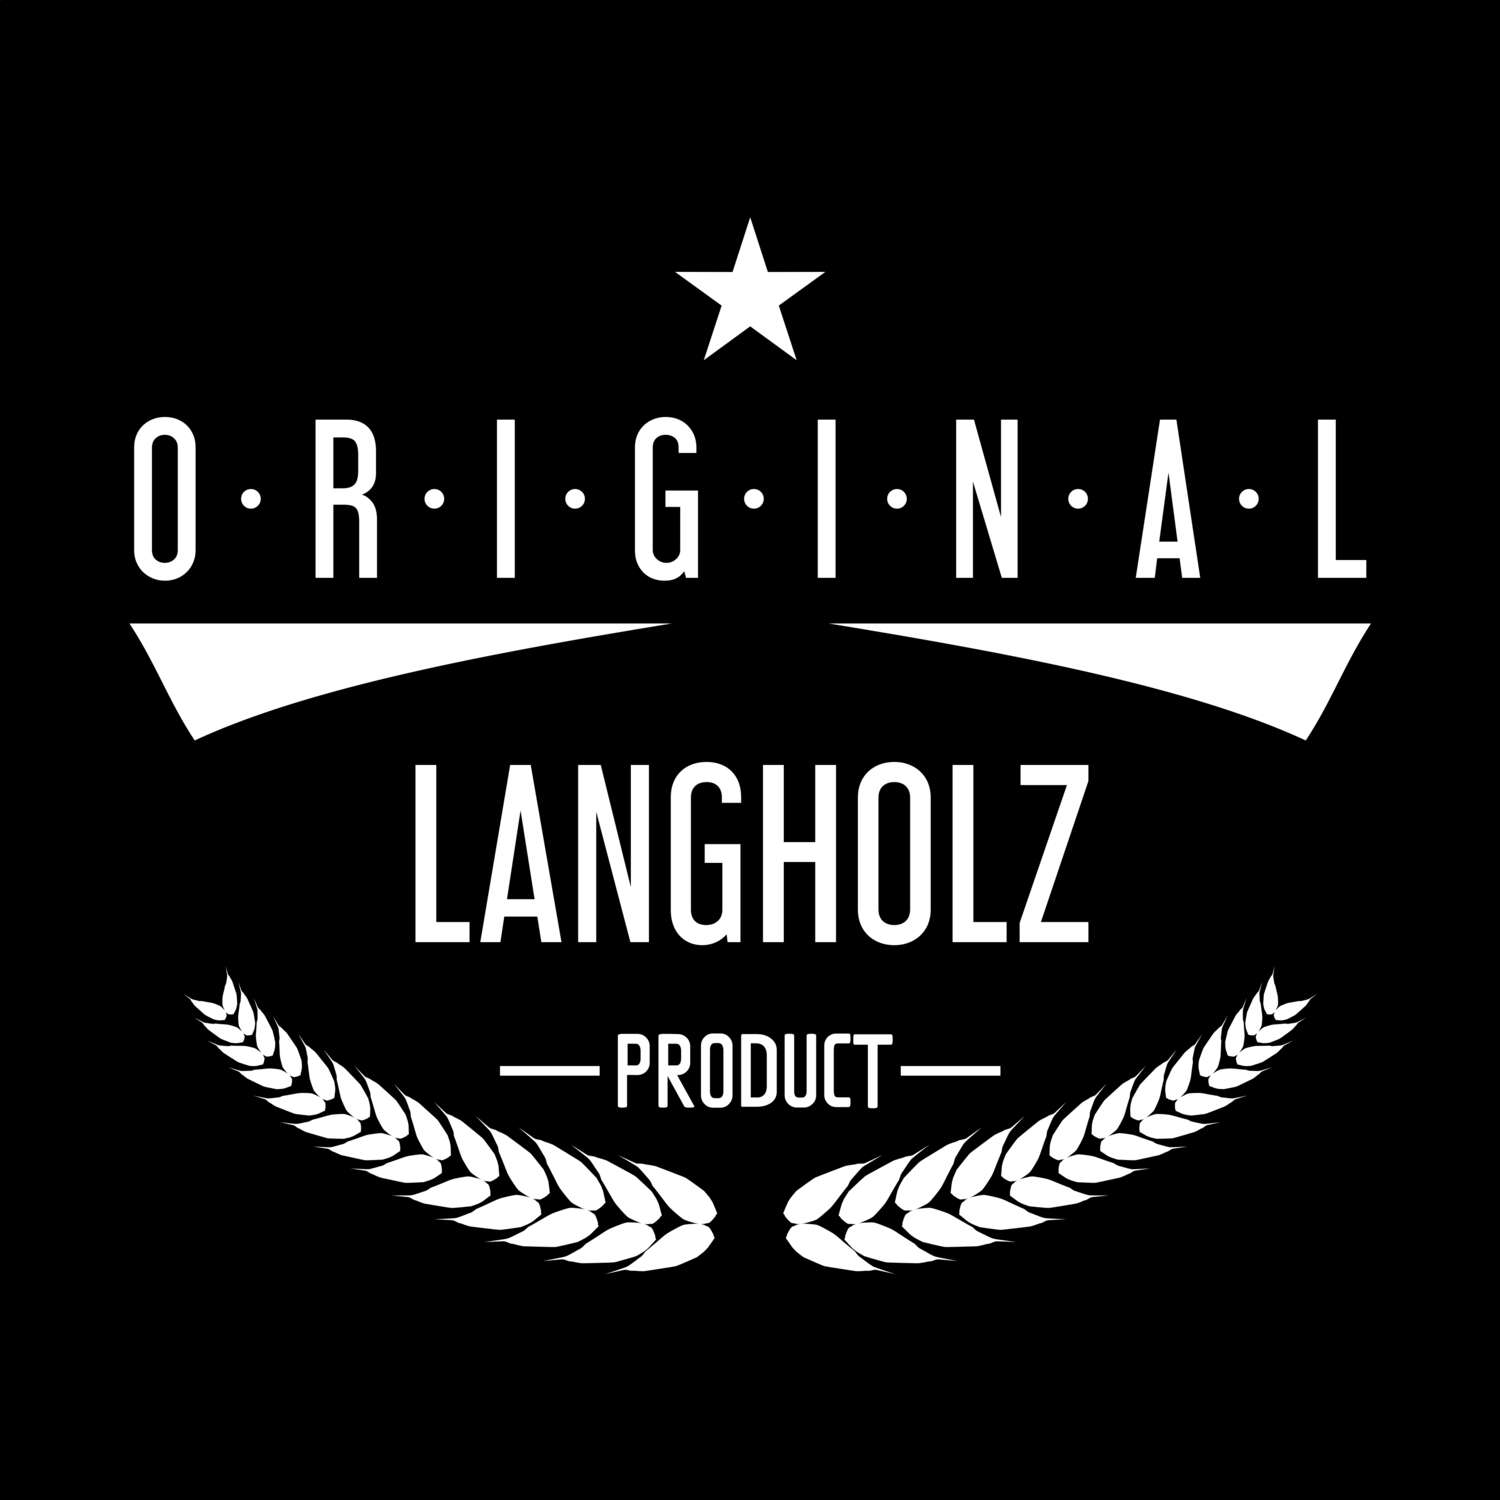 Langholz T-Shirt »Original Product«